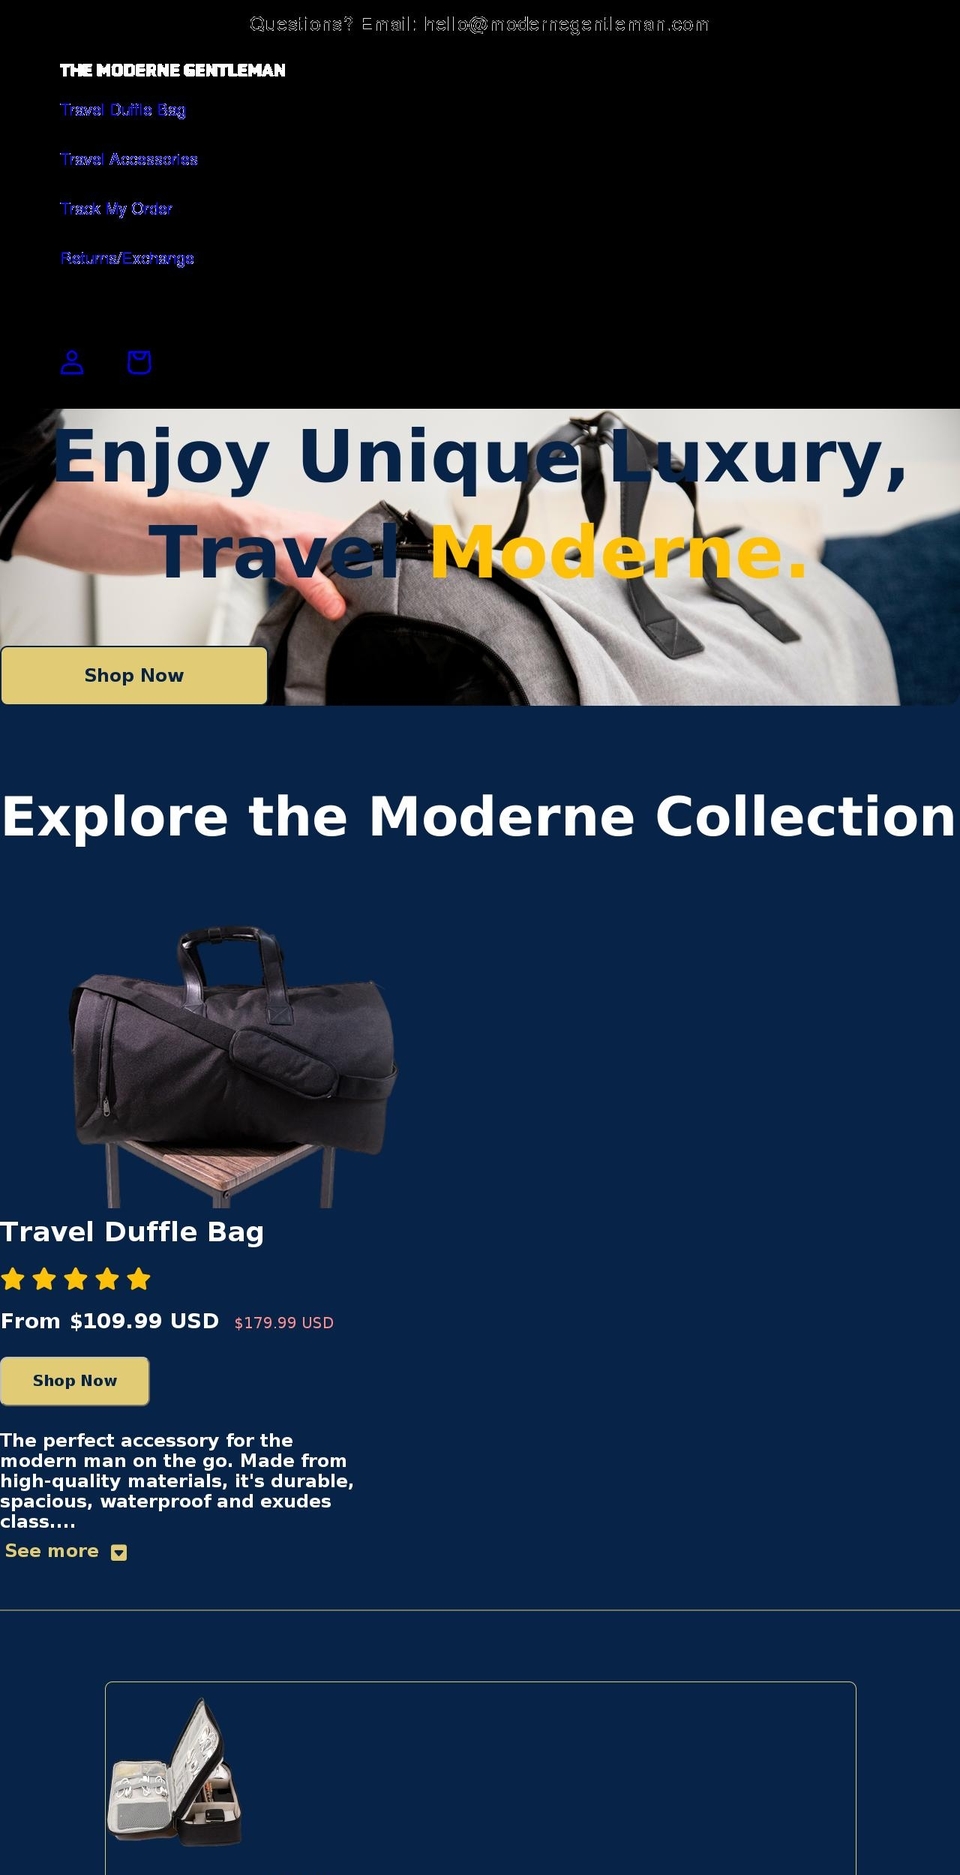 ThemeX Shopify theme site example modernegentleman.com